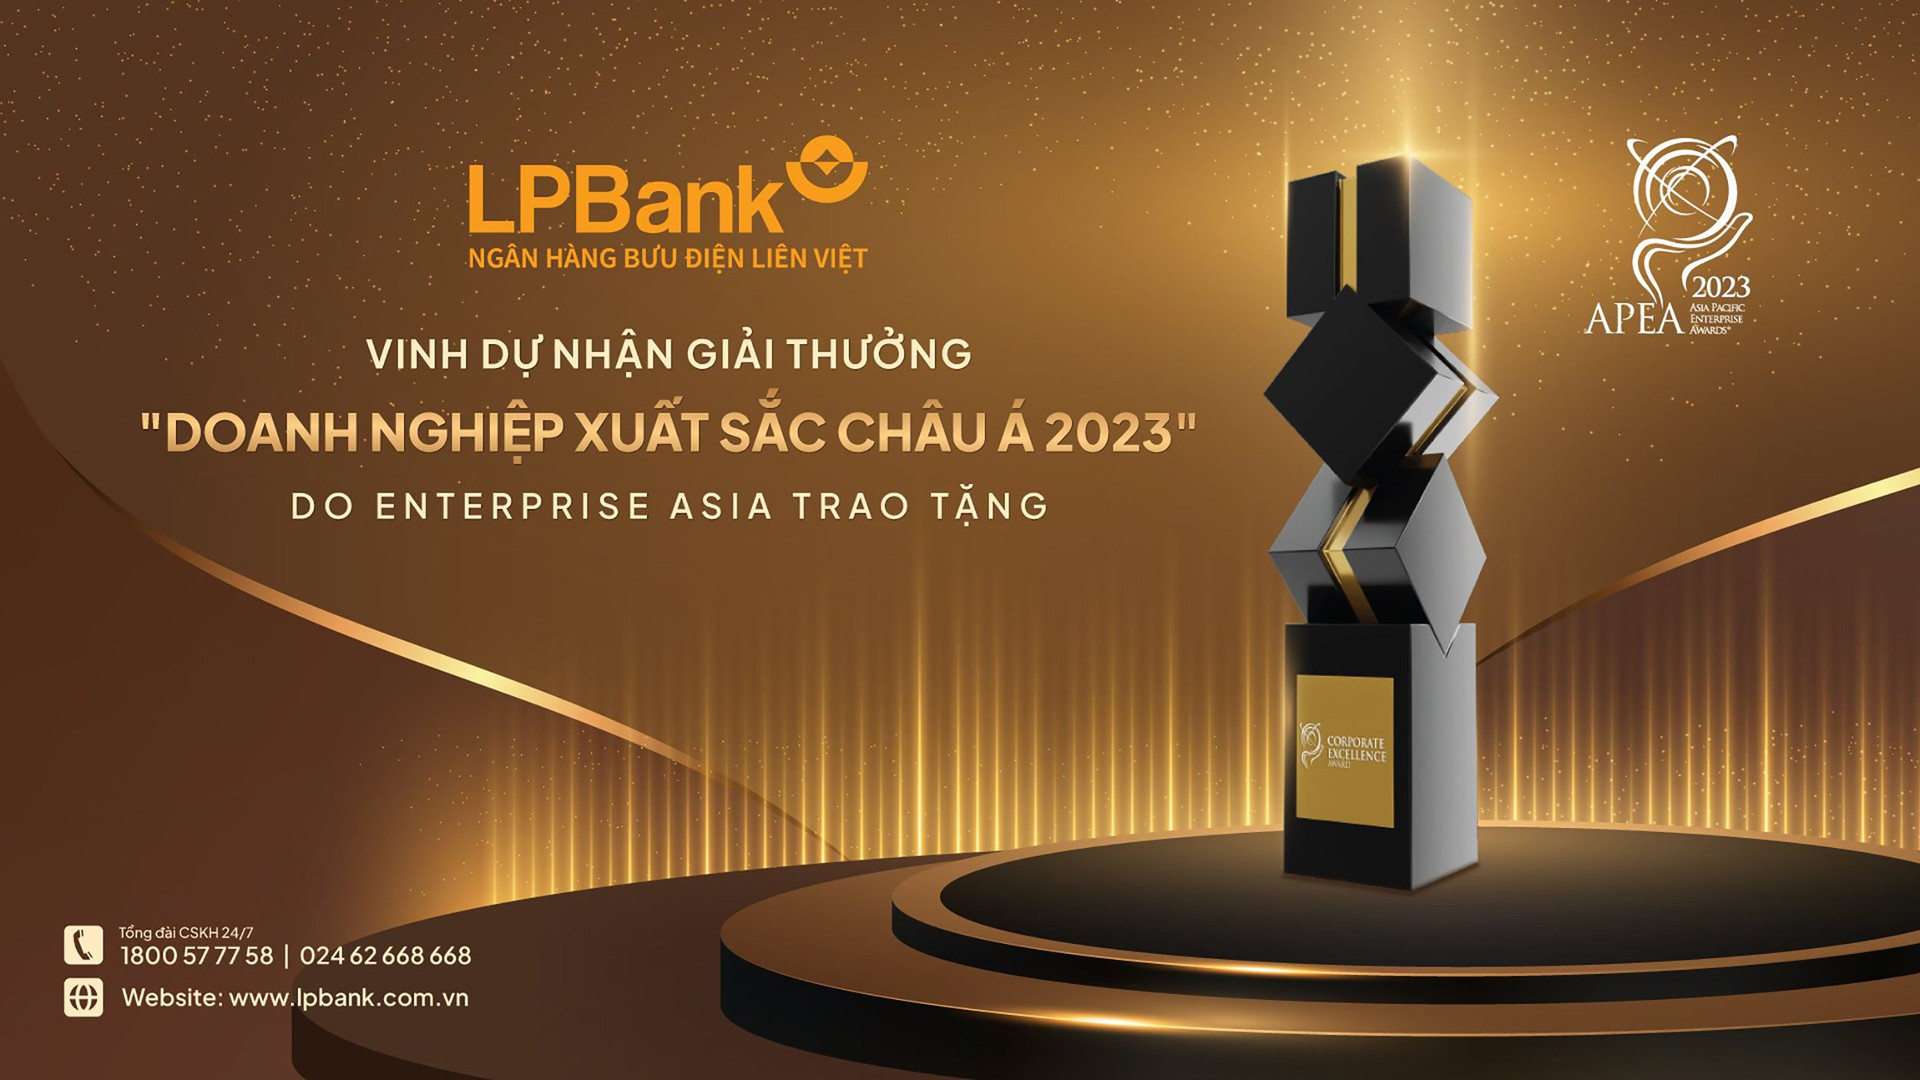 lpbank-doanh-nghiep-xuat-sac-chau-a-2023.jpg